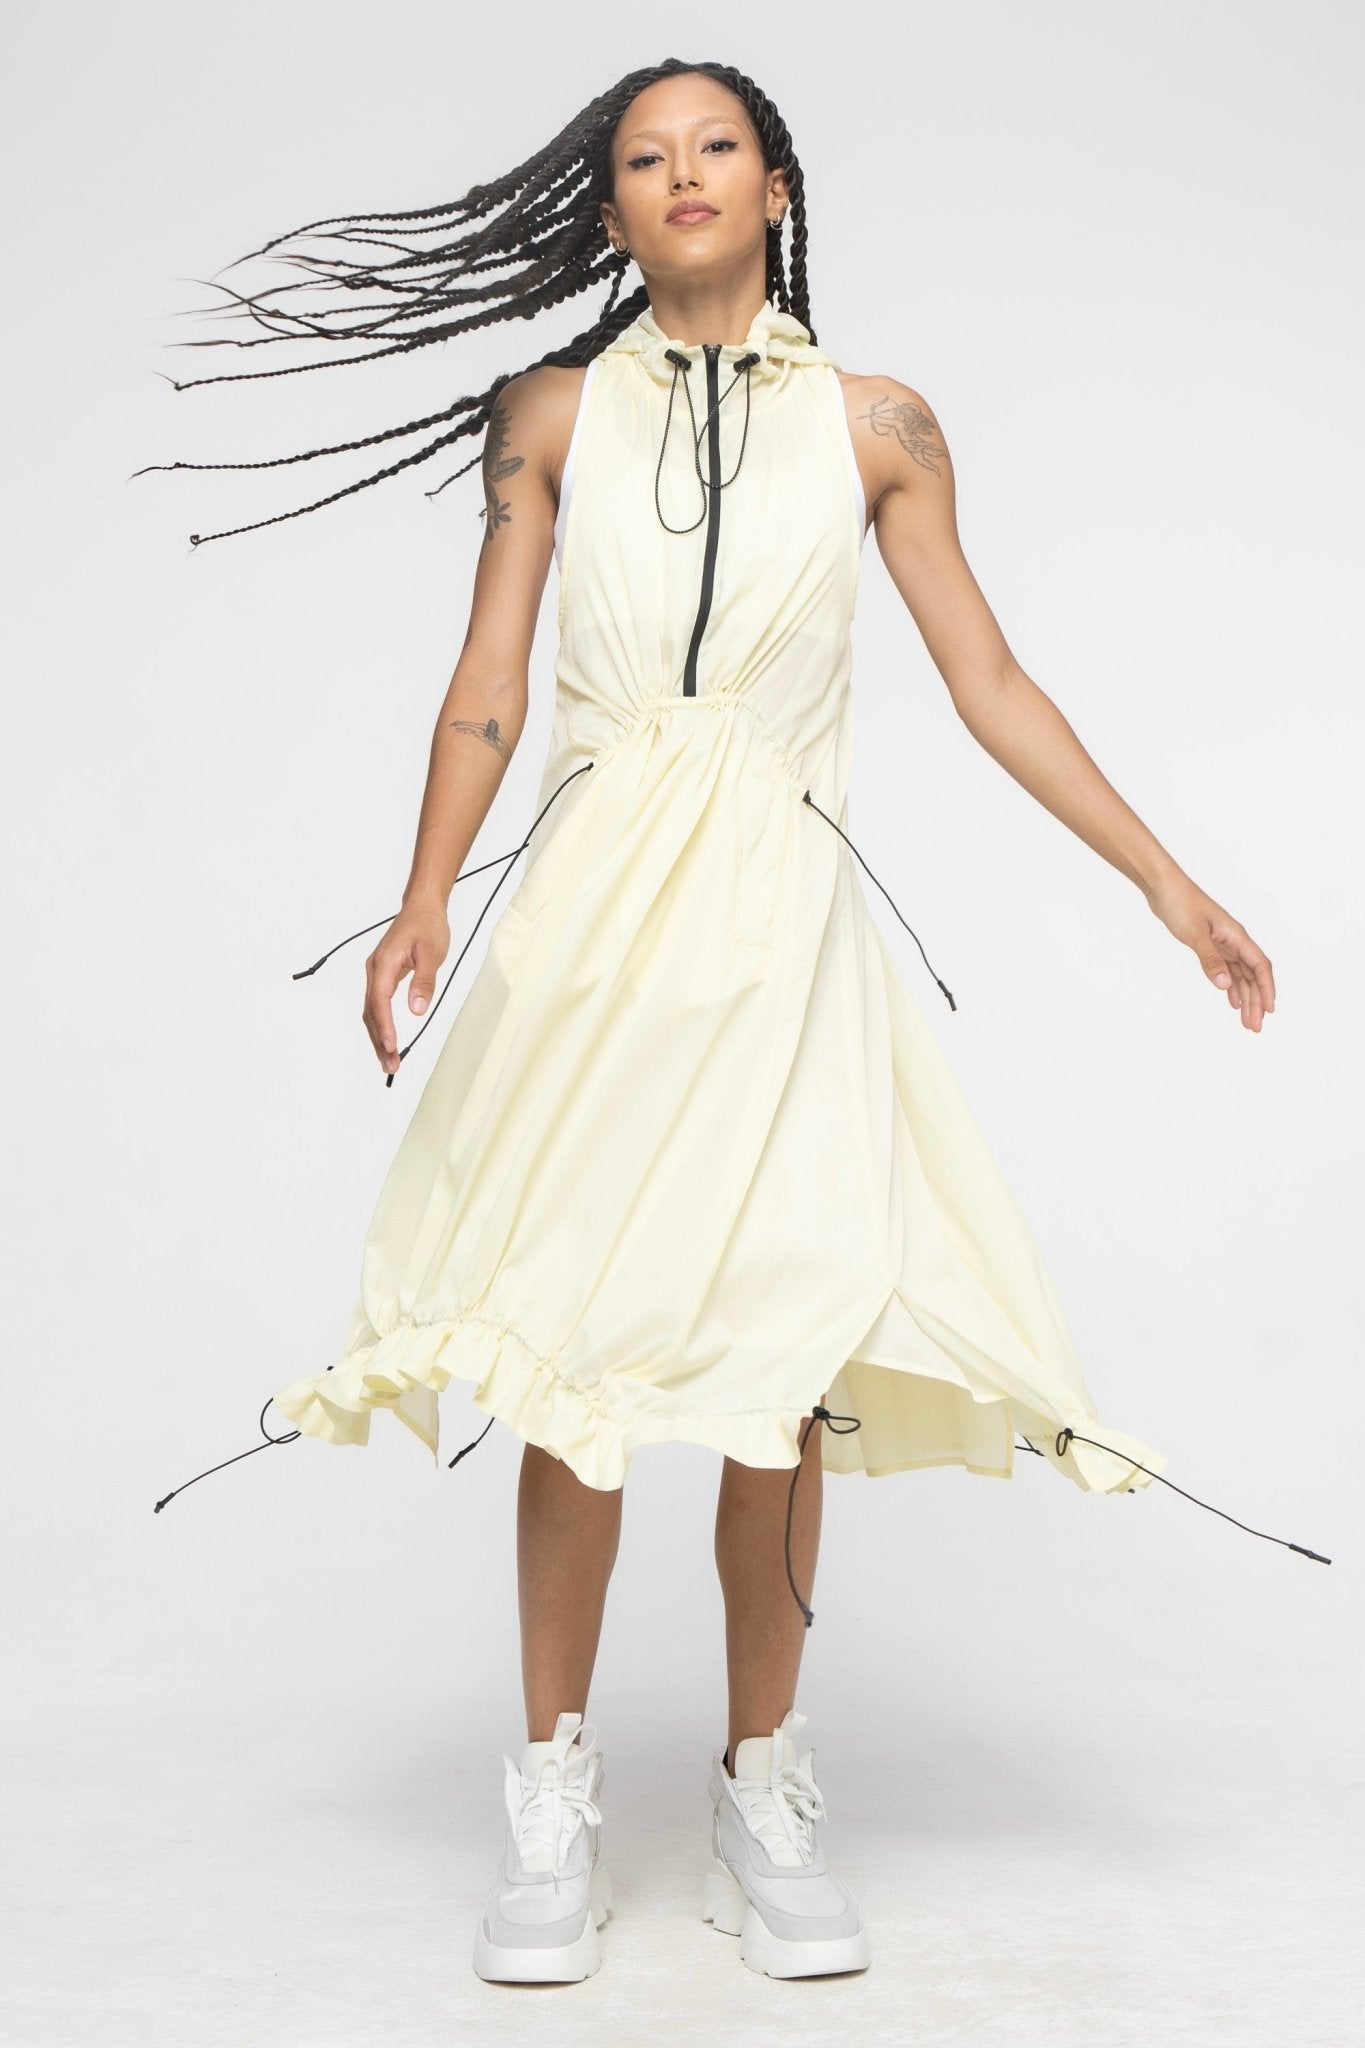 Marina Parachute Dress - Magnlens